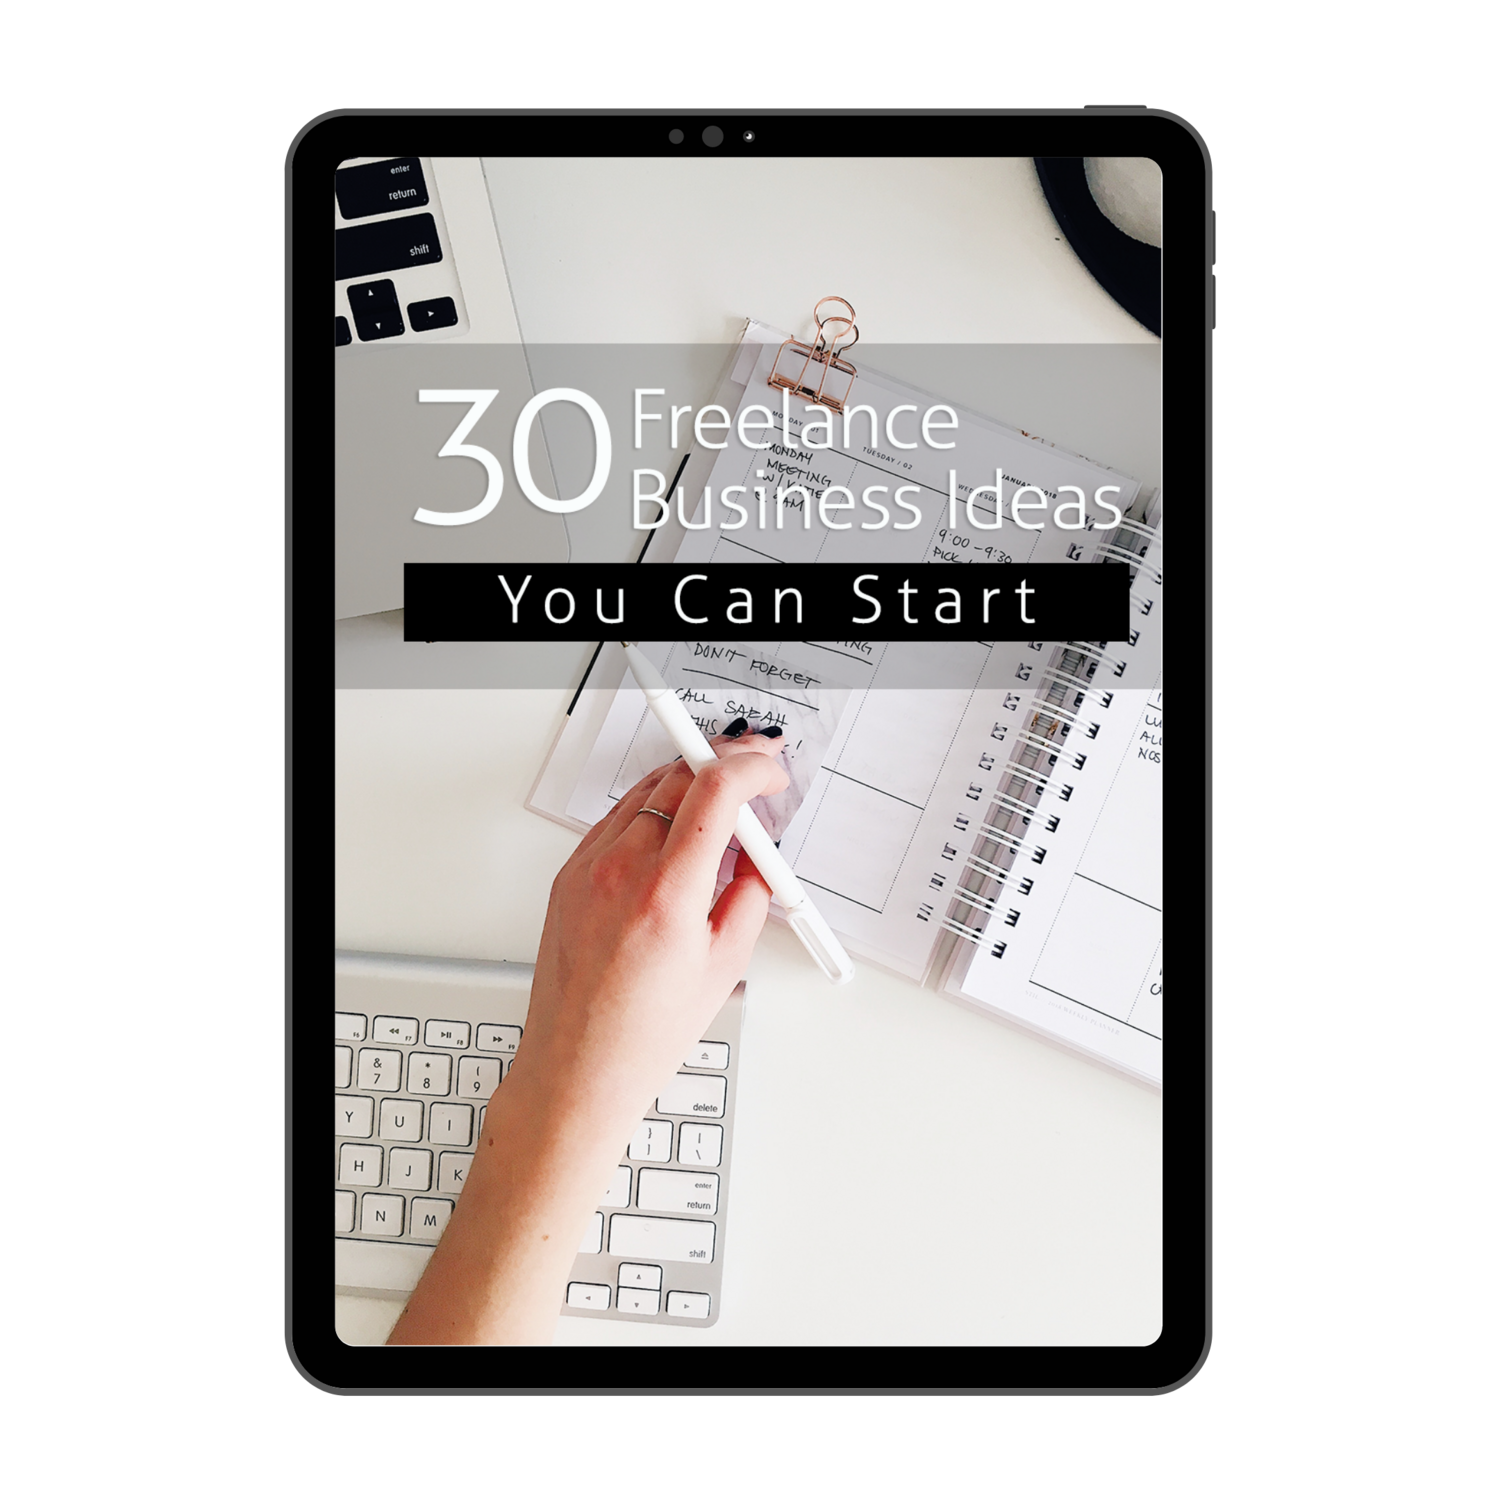 30 Freelance Business Ideas You Can Start E-Book